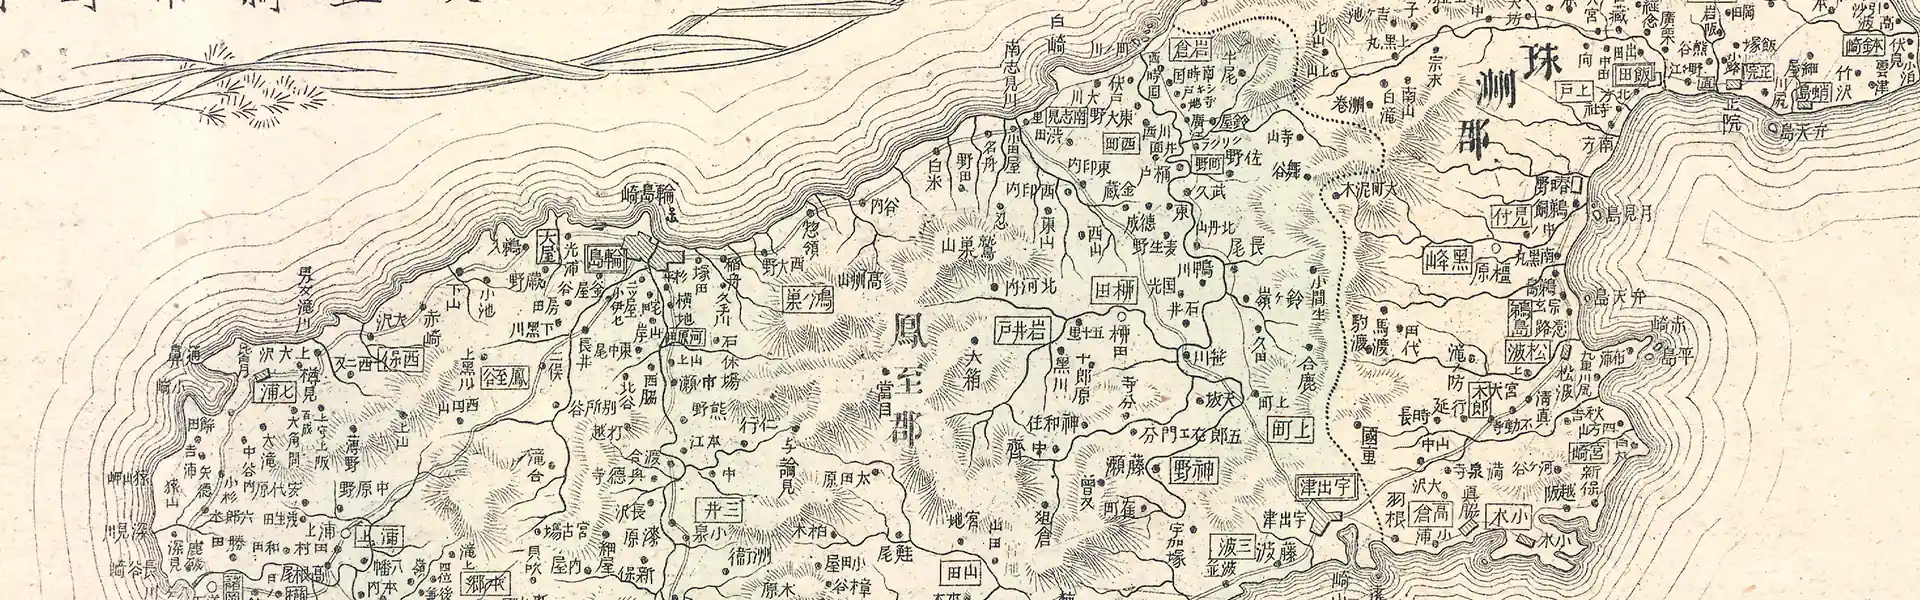 Map of Ishikawa Prefecture (1897) - Dainihon Jurisdictional Divisions